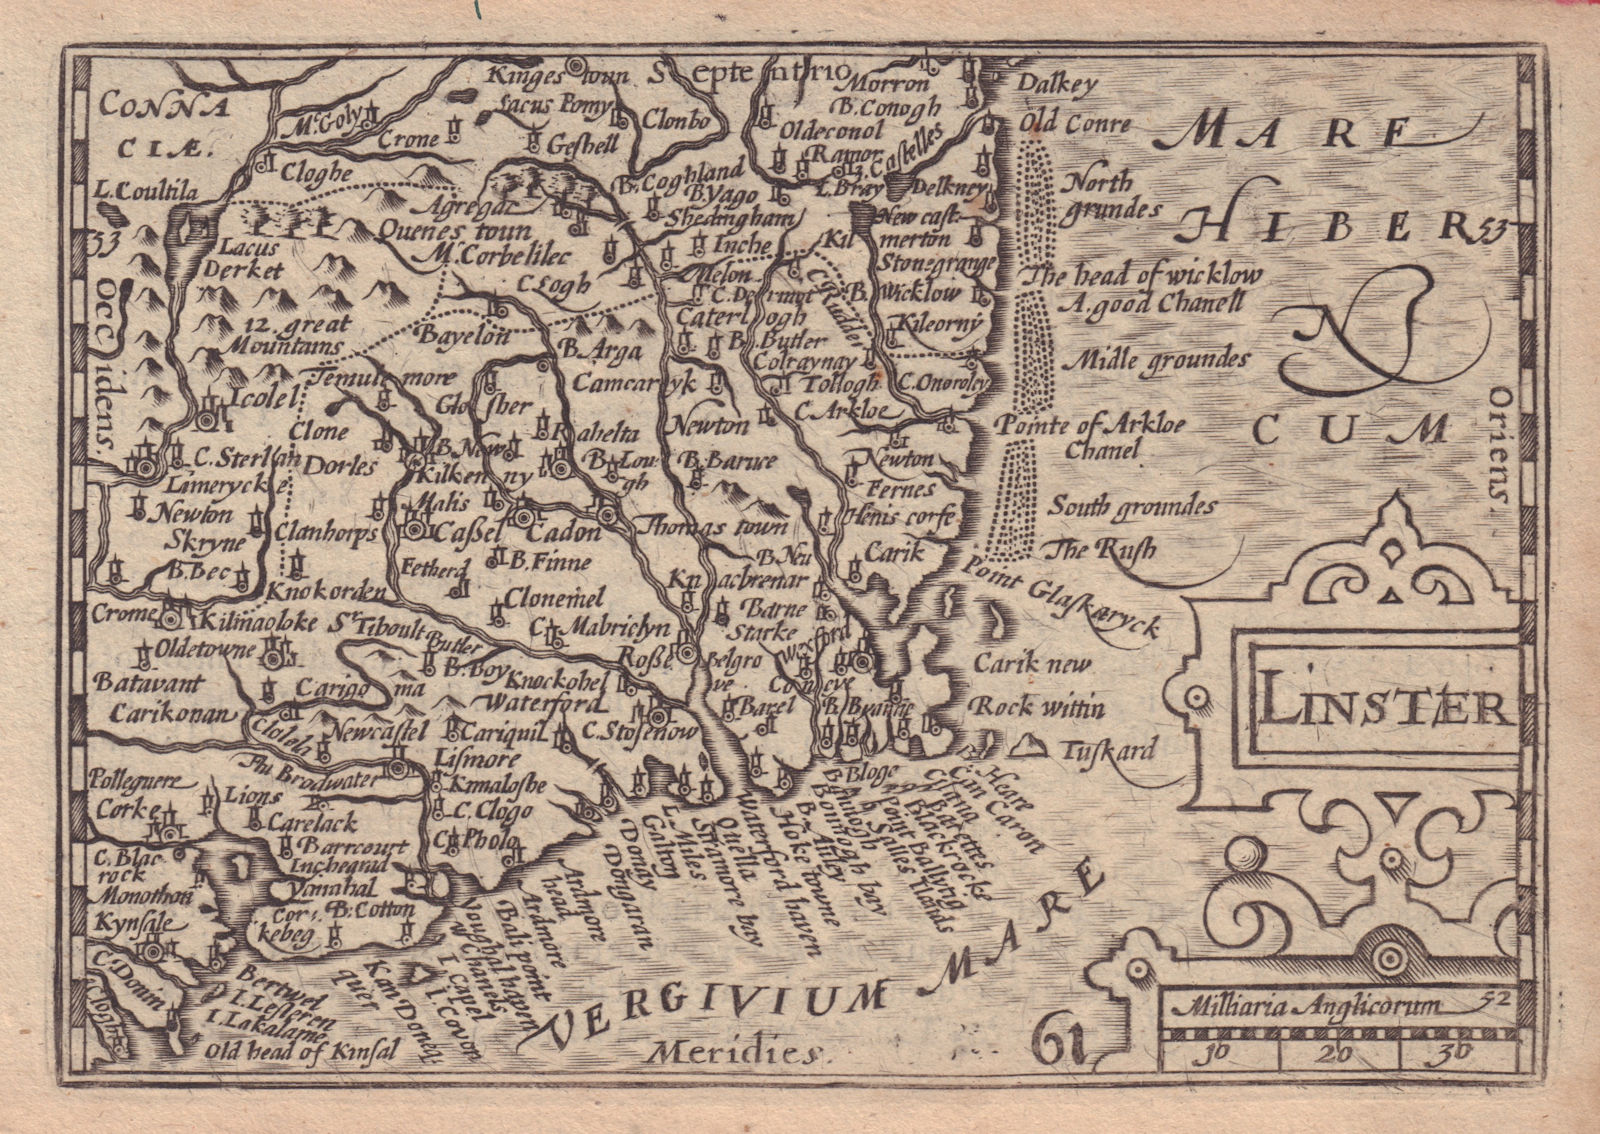 Associate Product Linster by van den Keere. "Speed miniature" Leinster, Ireland 1632 old map